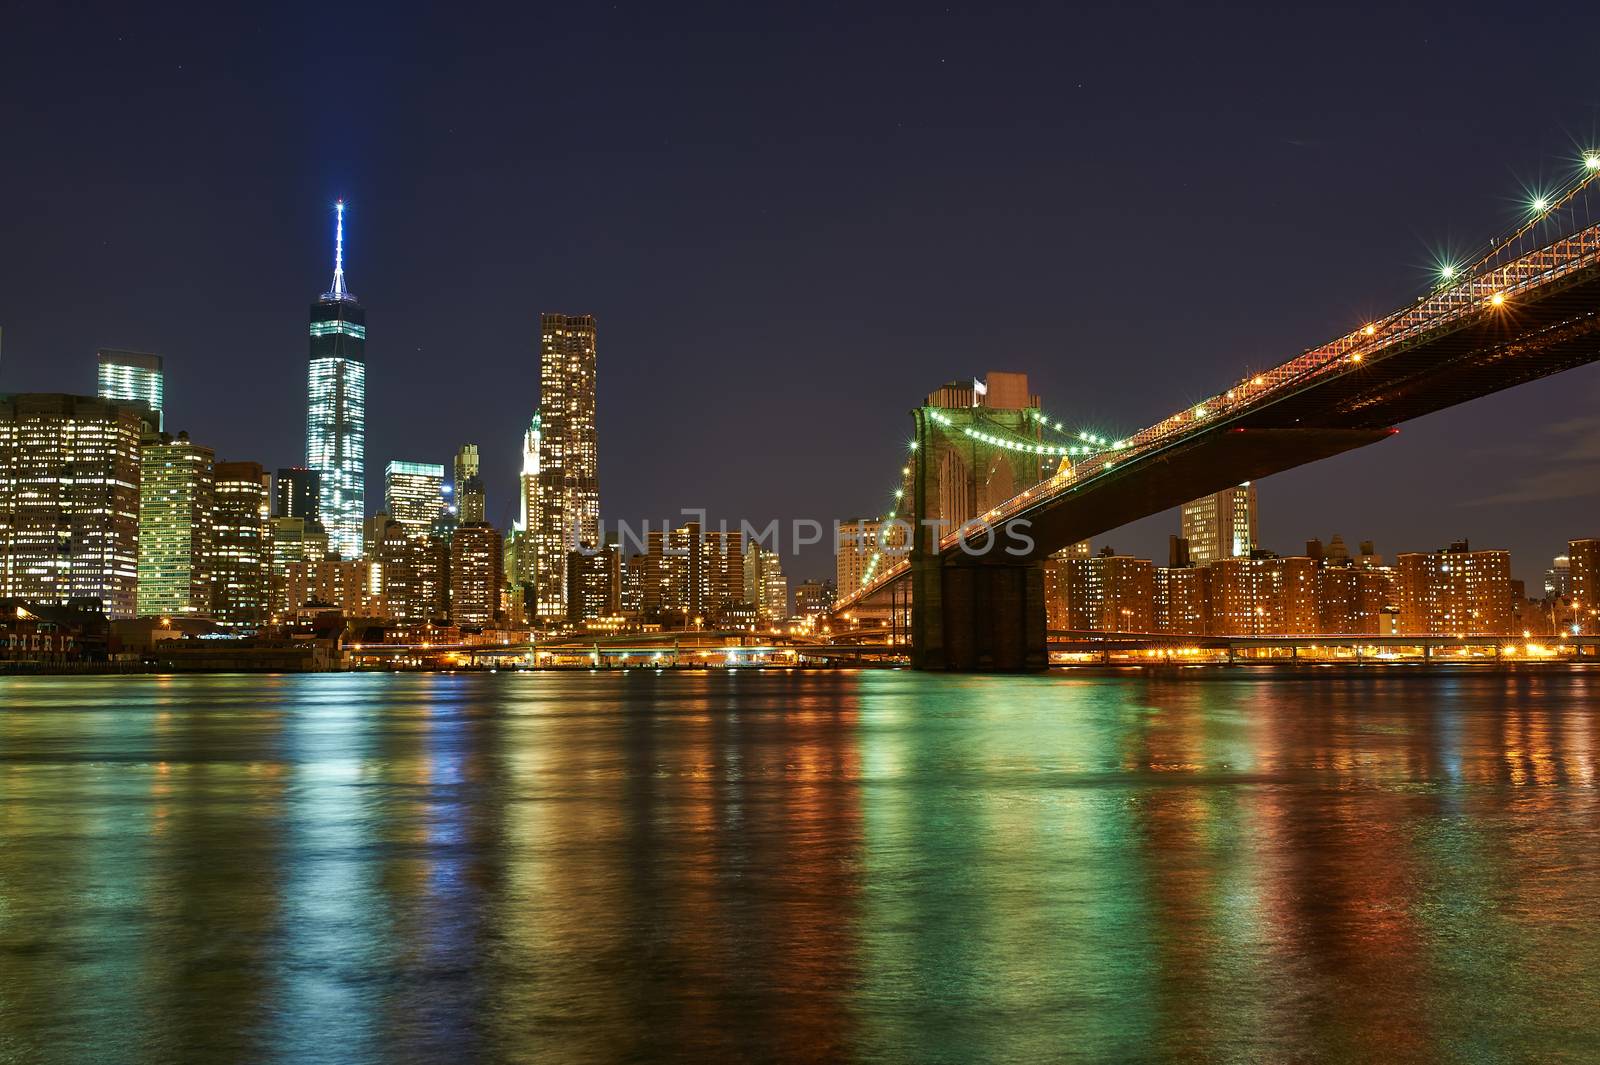 Brooklyn Bridge with lower Manhattan skyline at night by haveseen